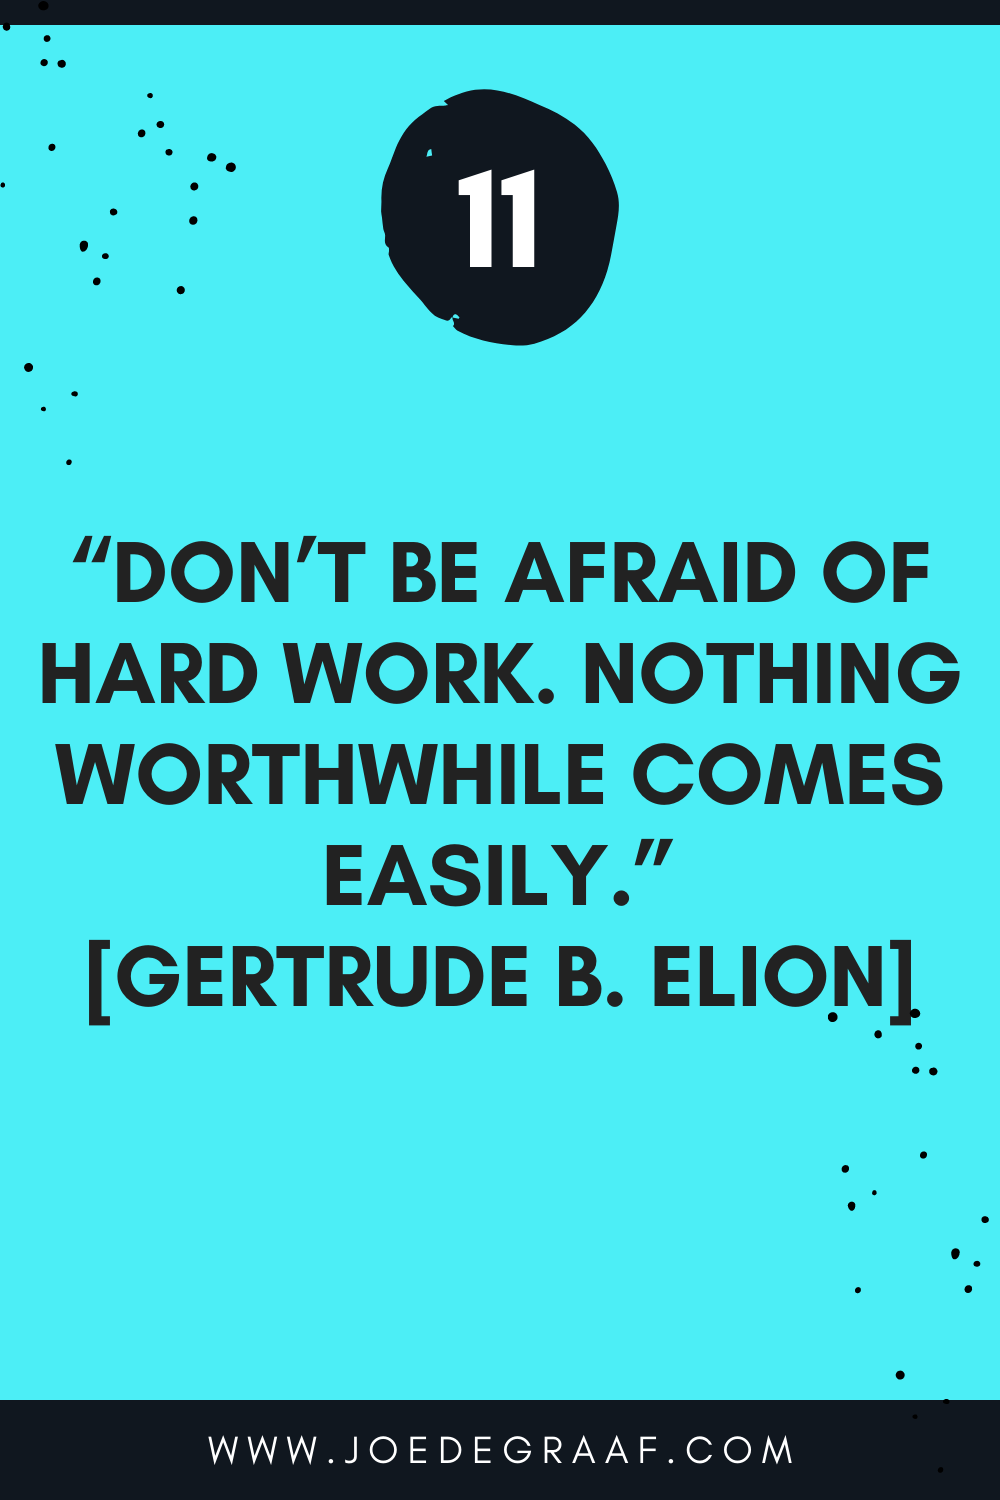 Elion quote on work motivation